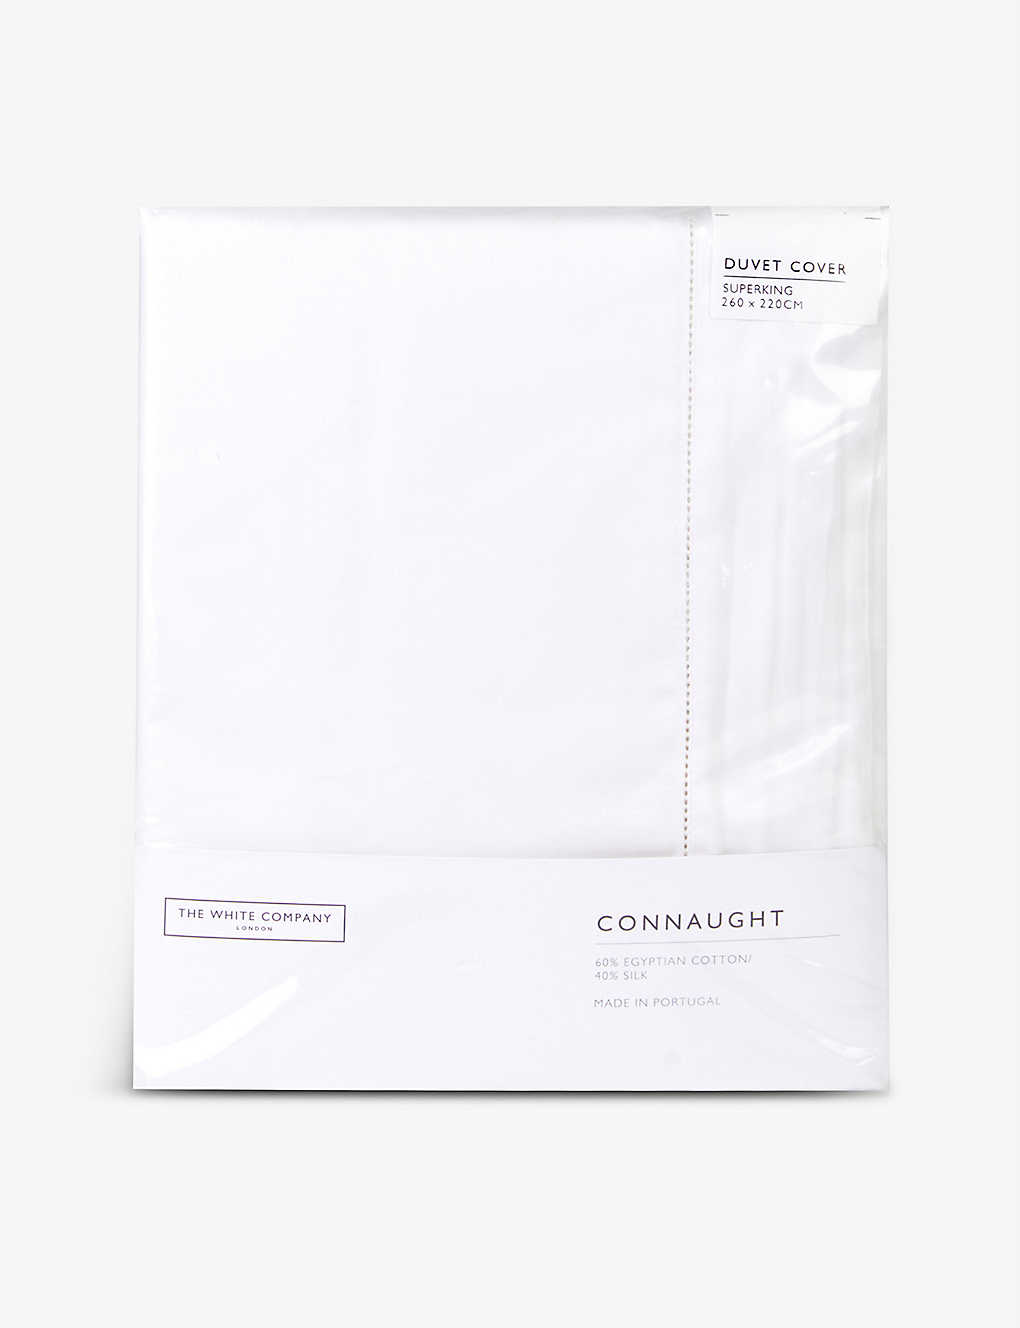 THE WHITE COMPANY コナウト コットン アンド シルクブレンド スーパー キング デュベ カバー 260cm cover  Connaught super 220cm cotton x 世界有名な duvet #CHALK silk-blend and king